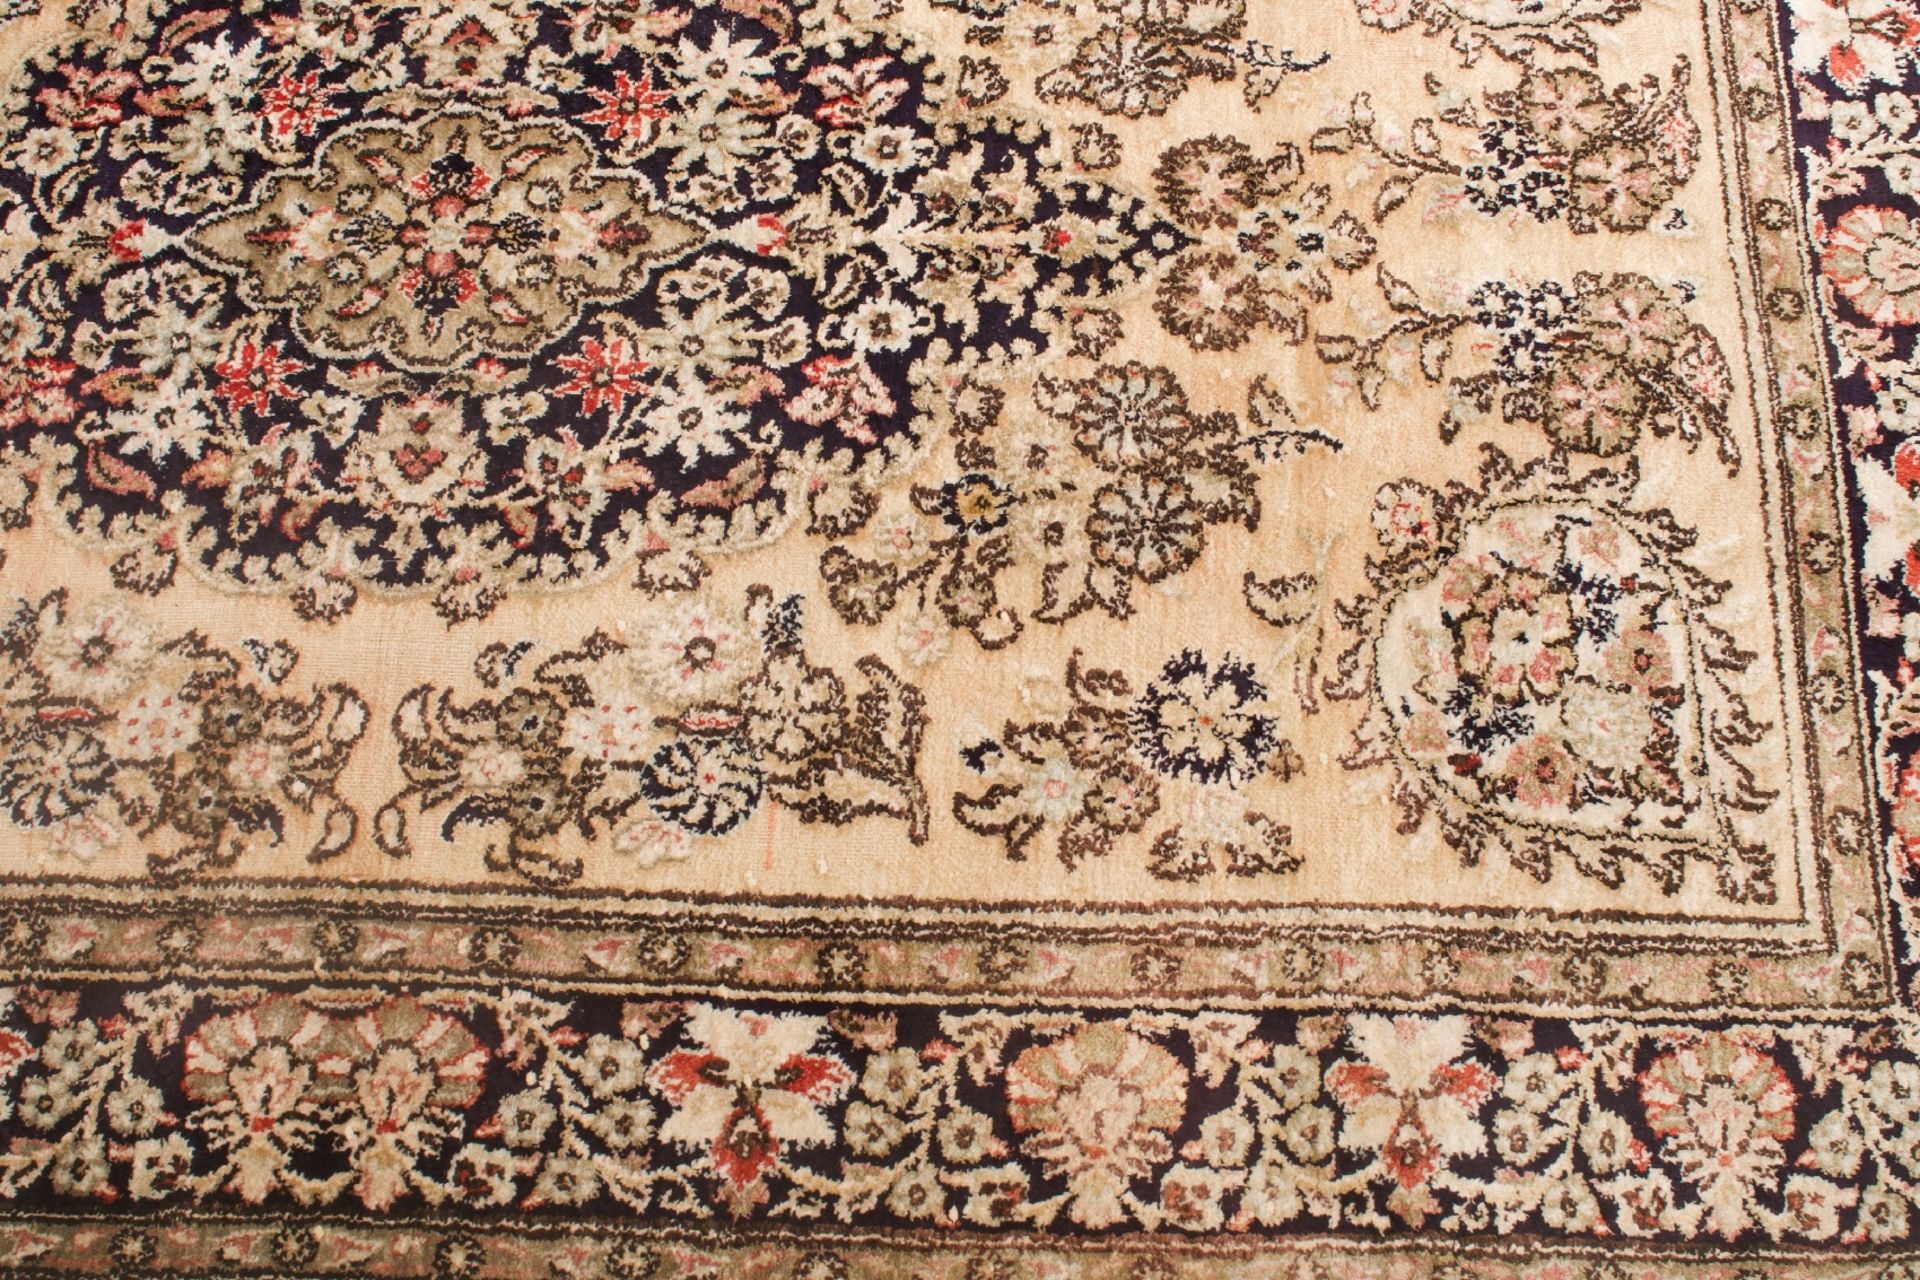 Ghom Seidenteppich Iran | Ghom silk carpet Iran - Image 6 of 6